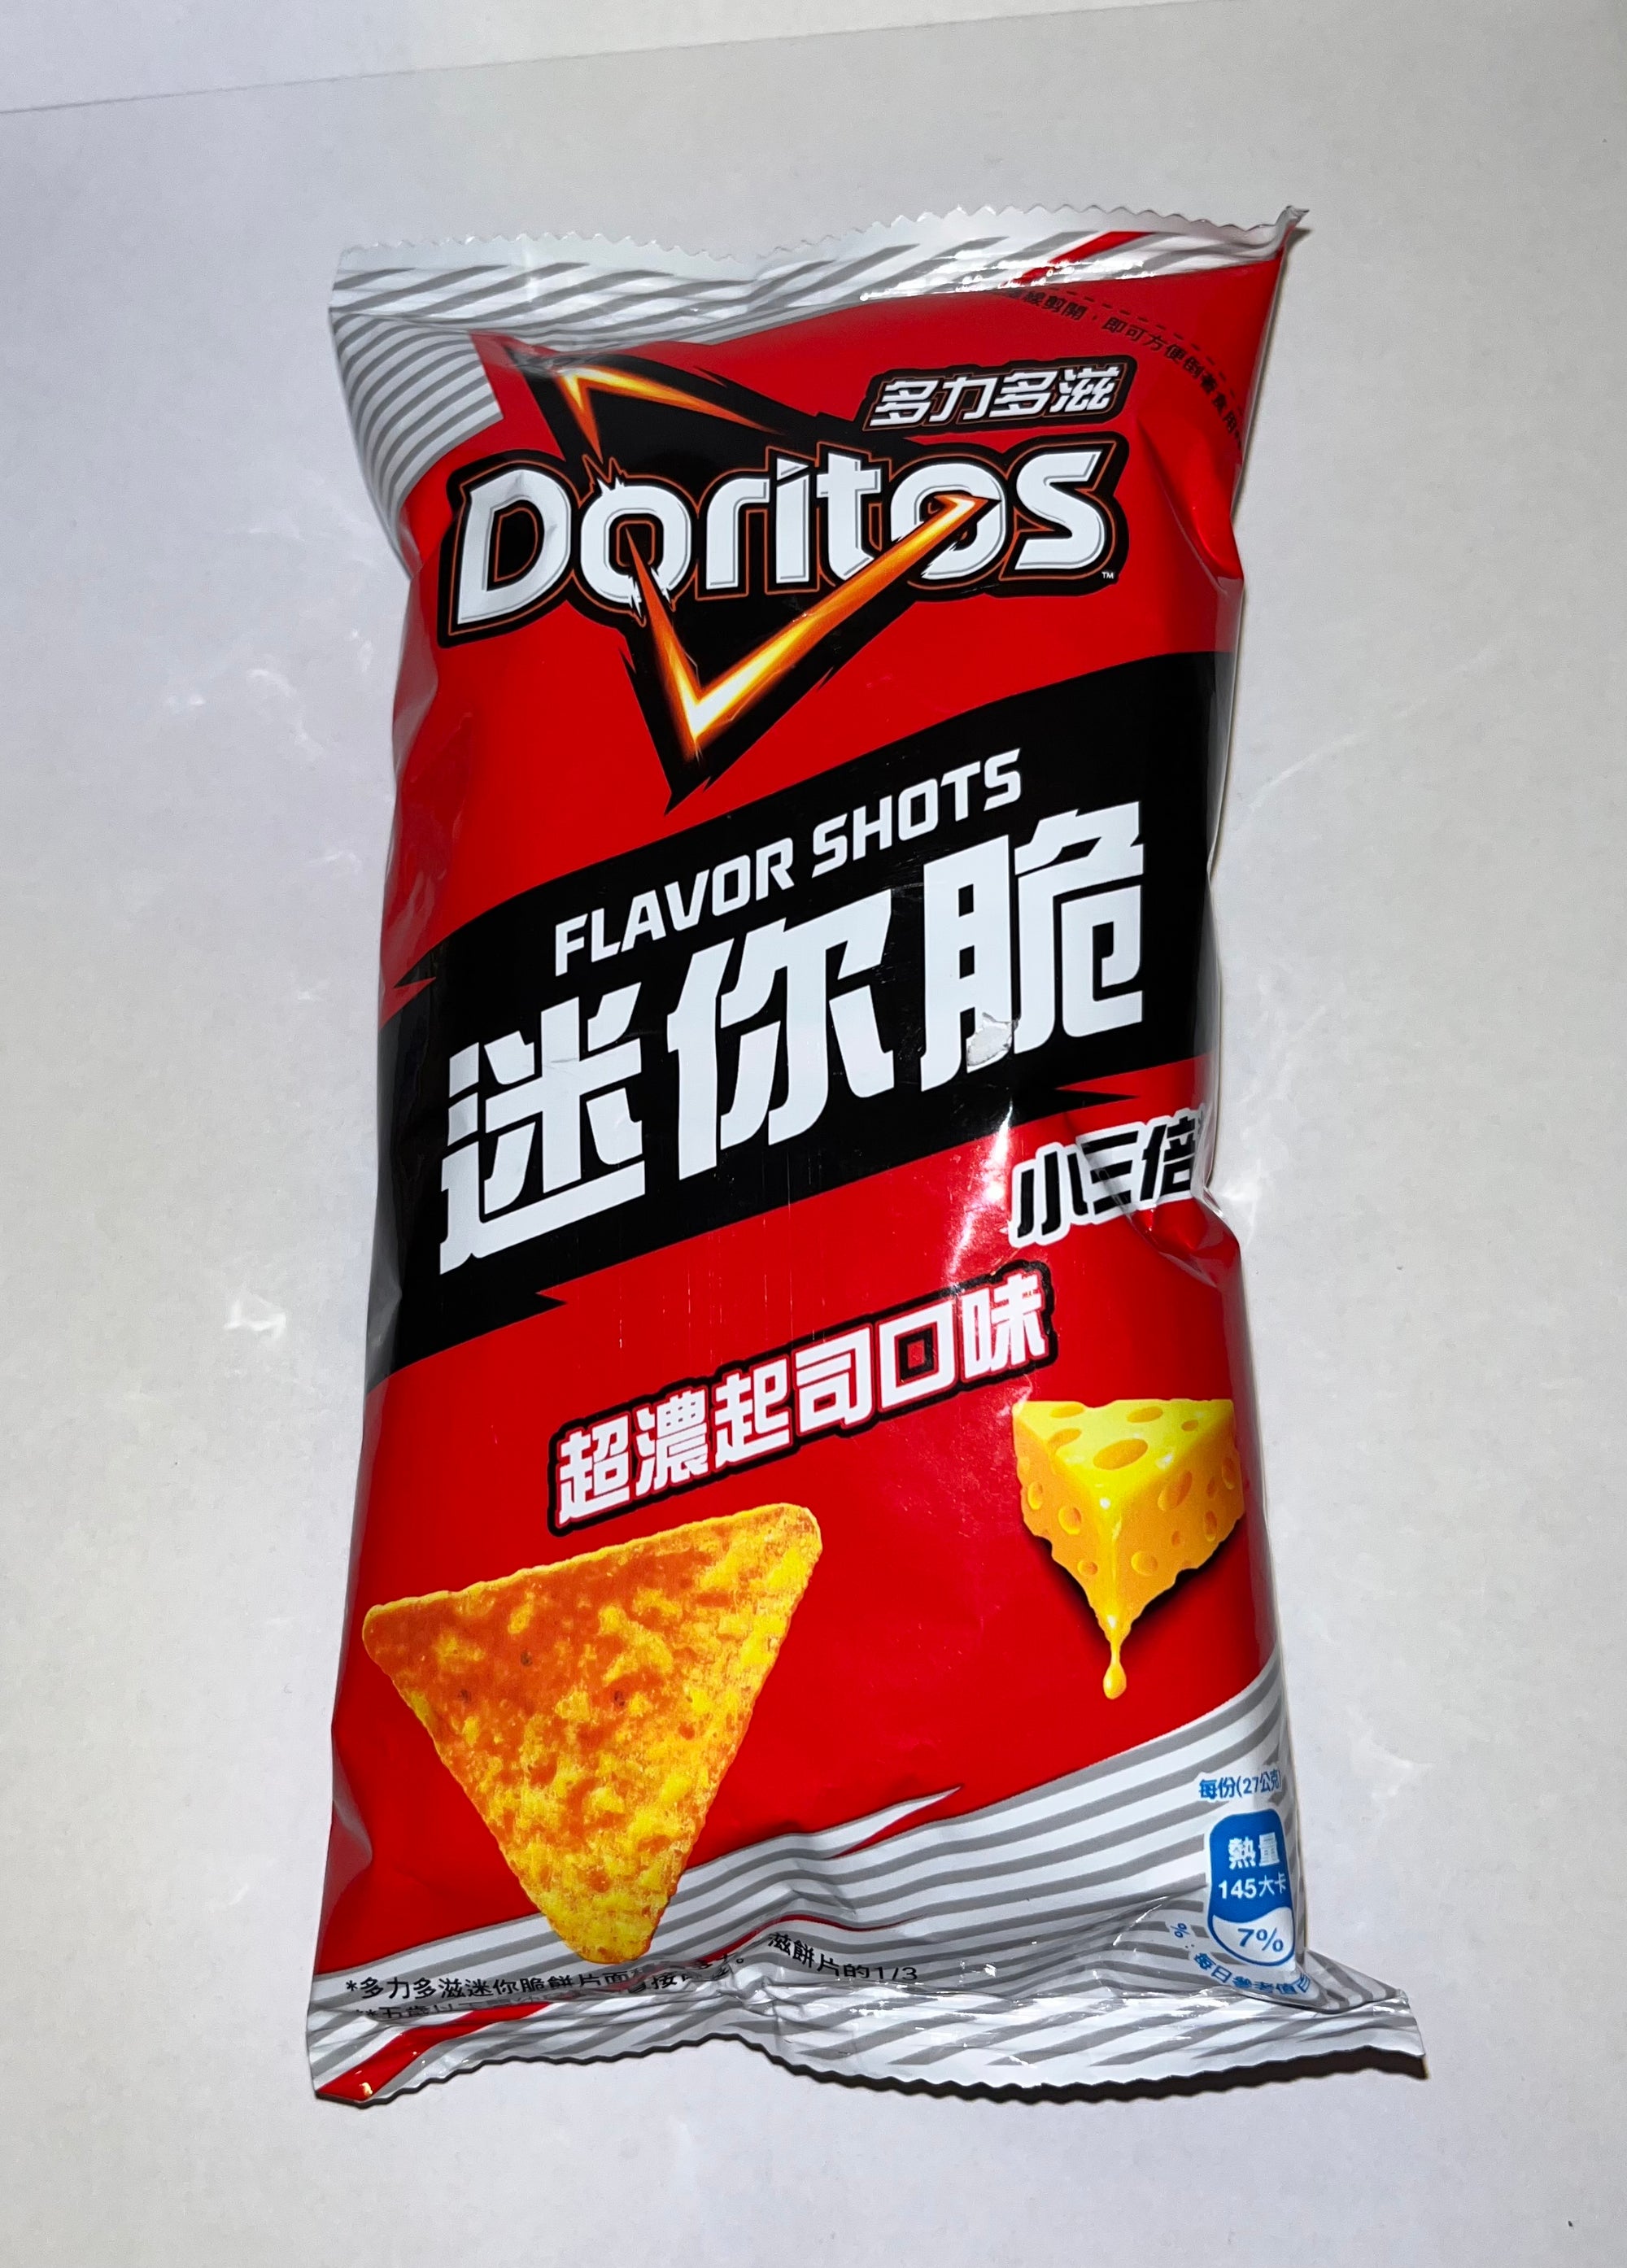 Doritos Shots Rich Cheese (Taiwan)